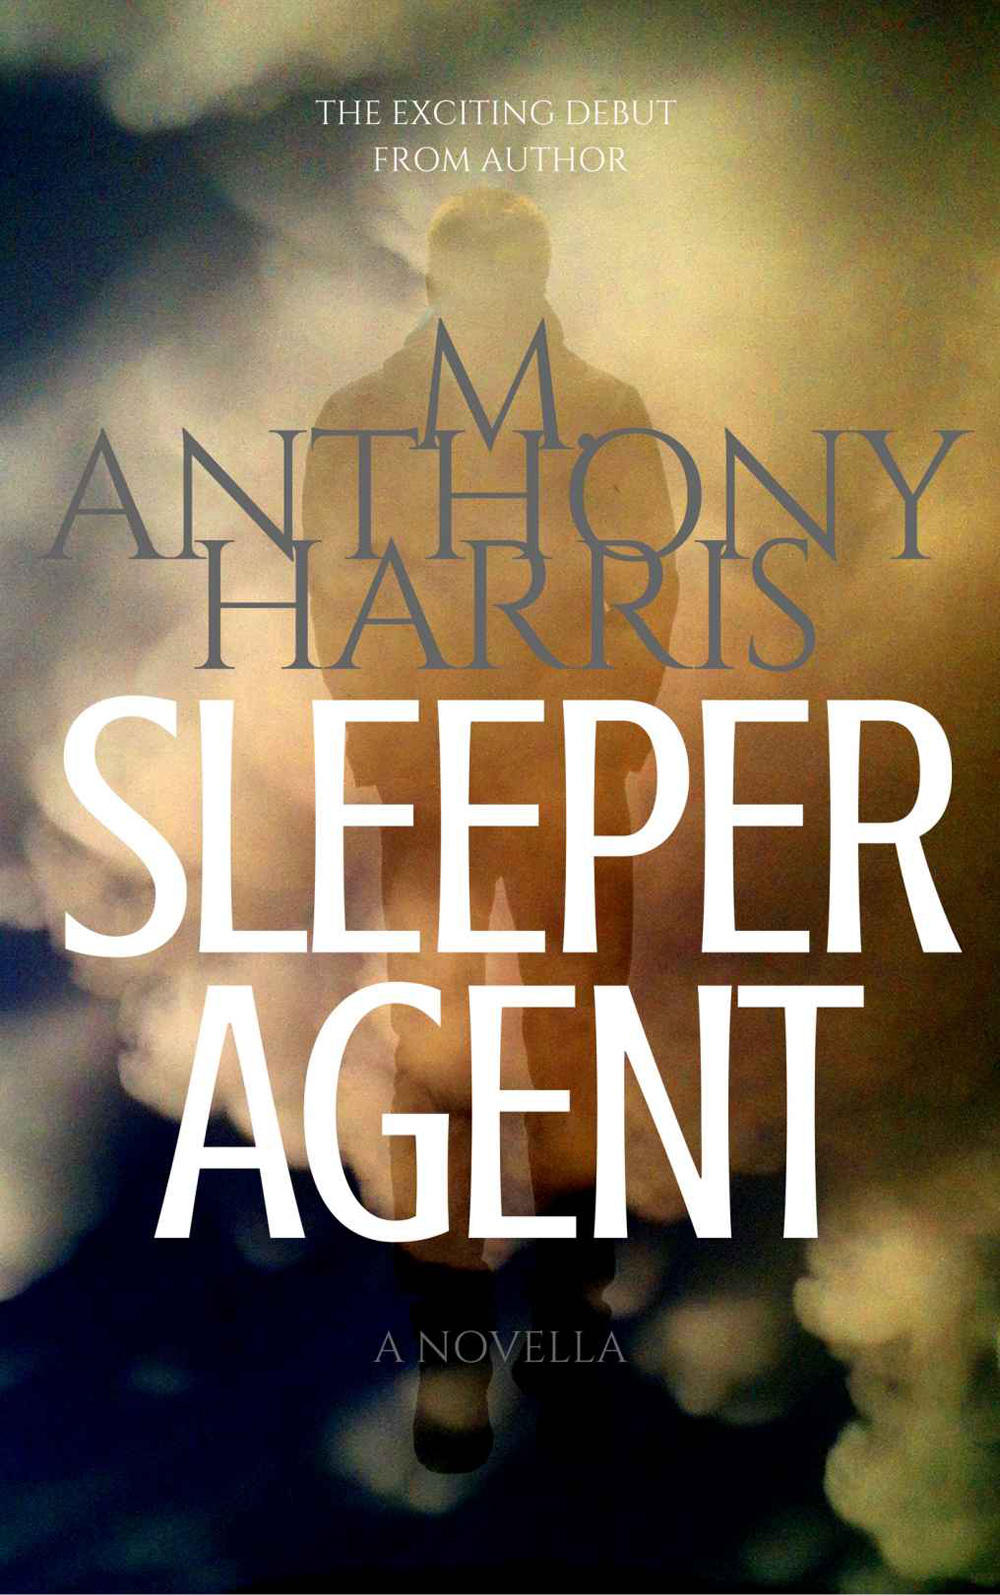 A shadowy spy walks through fog on the cover of 'Sleeper Agent.'